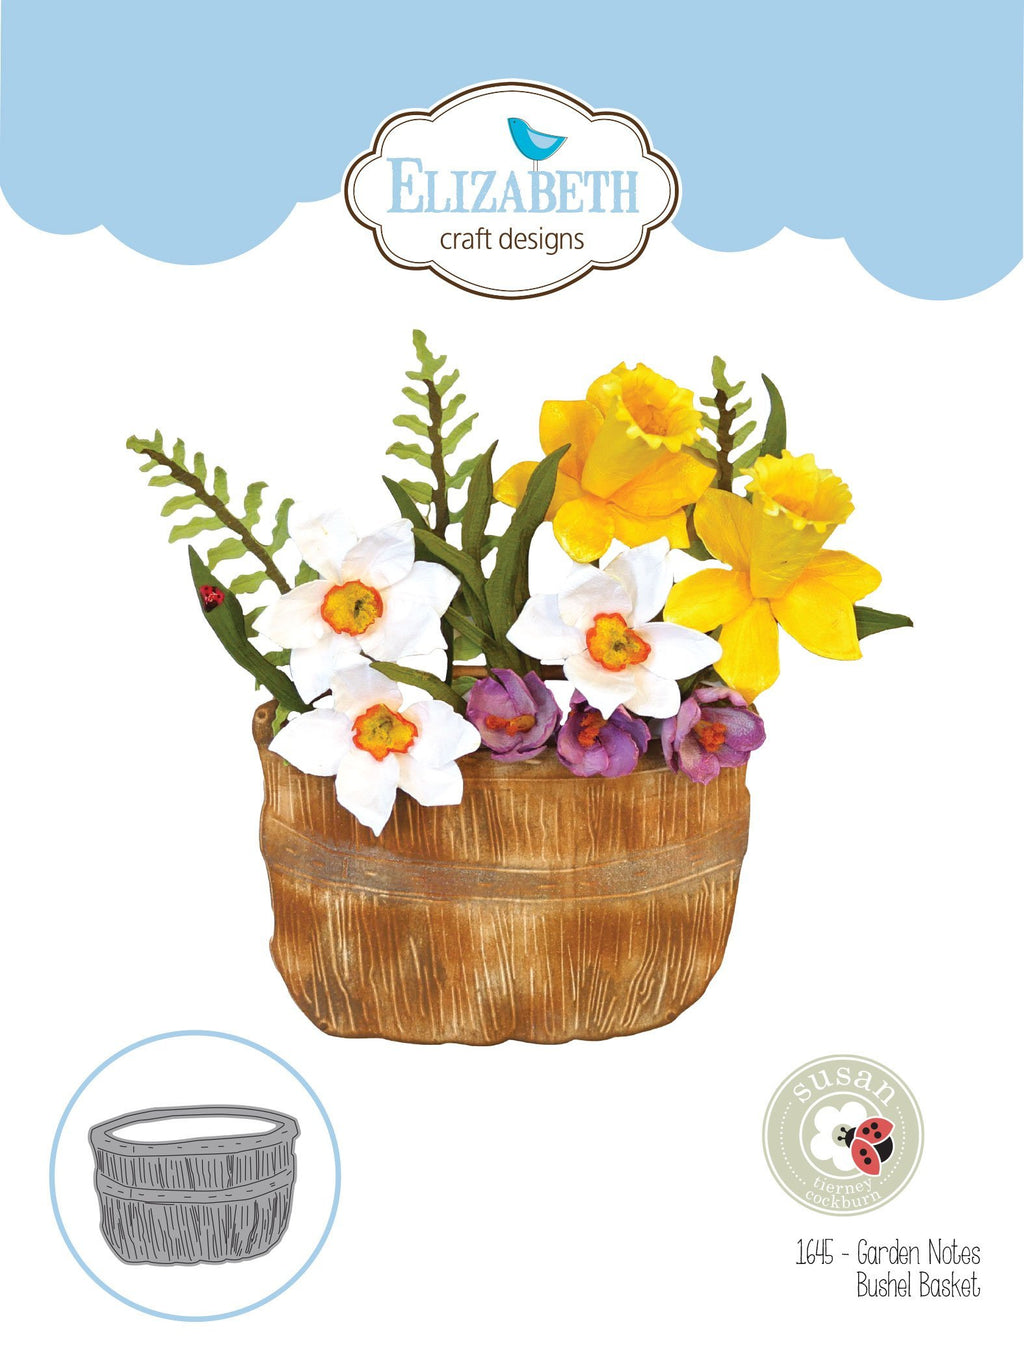 Elizabeth Craft Designs - Dies - Bushel Basket